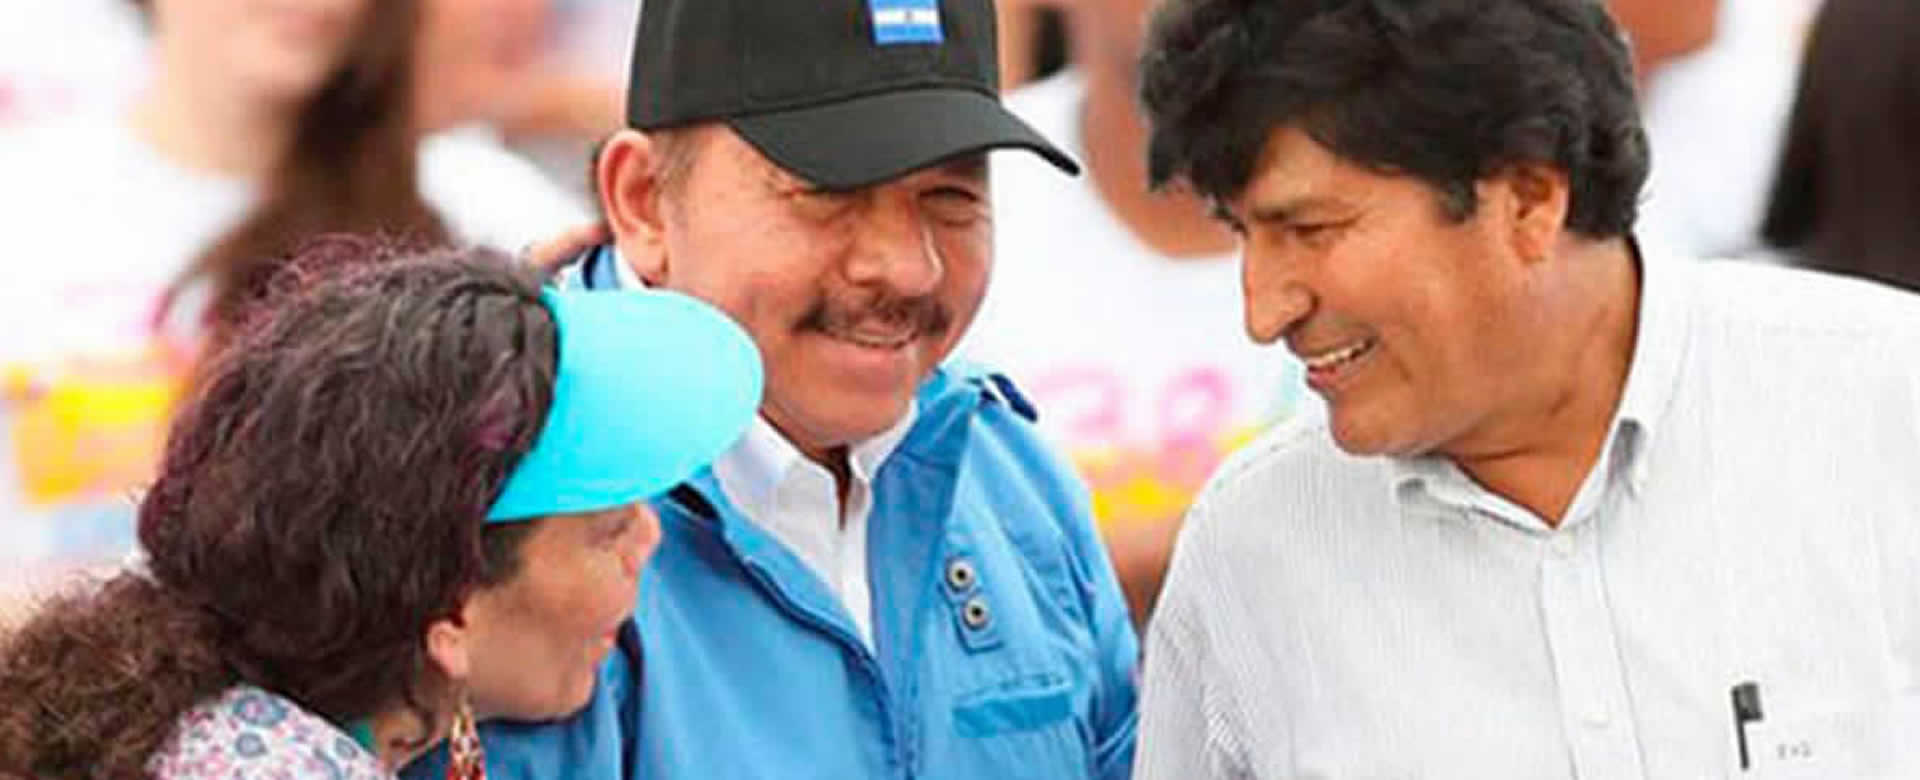 Nicaragua triunfo Evo Morales